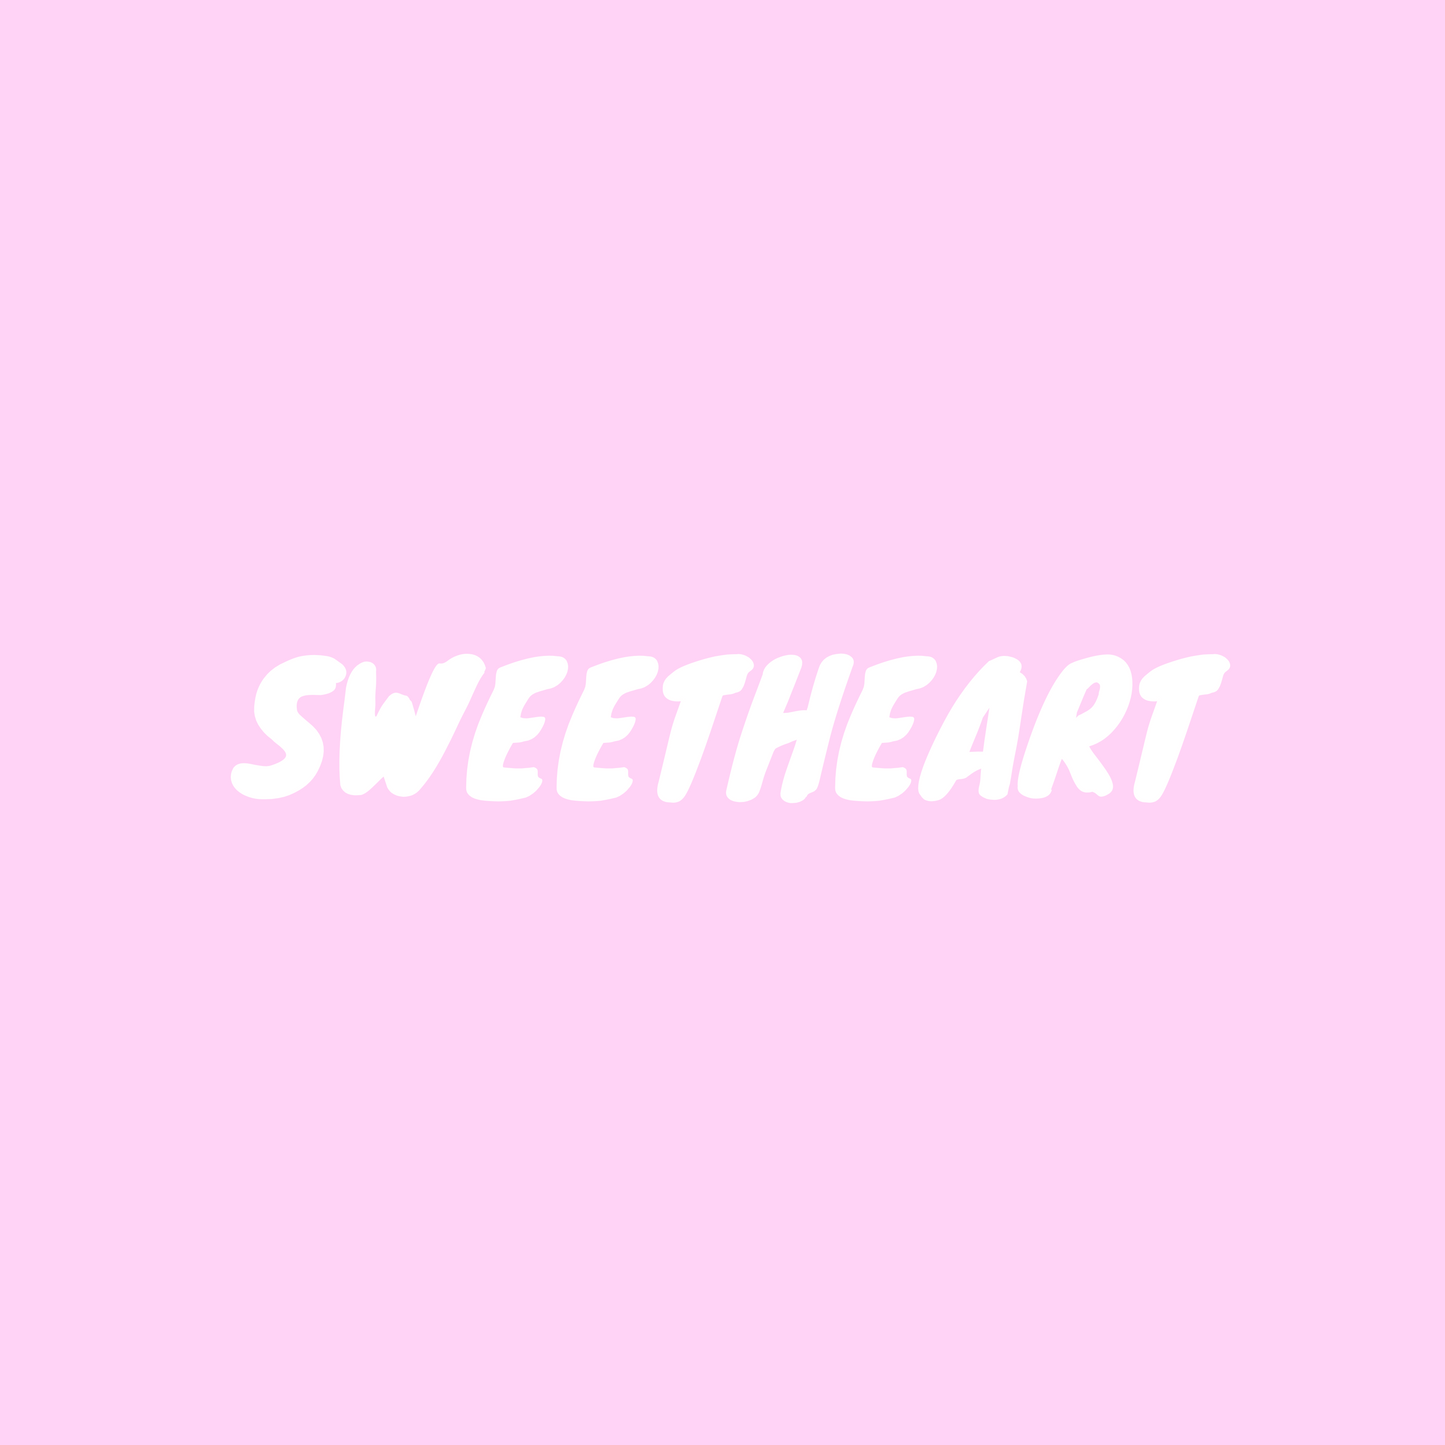 The Sweetheart Set